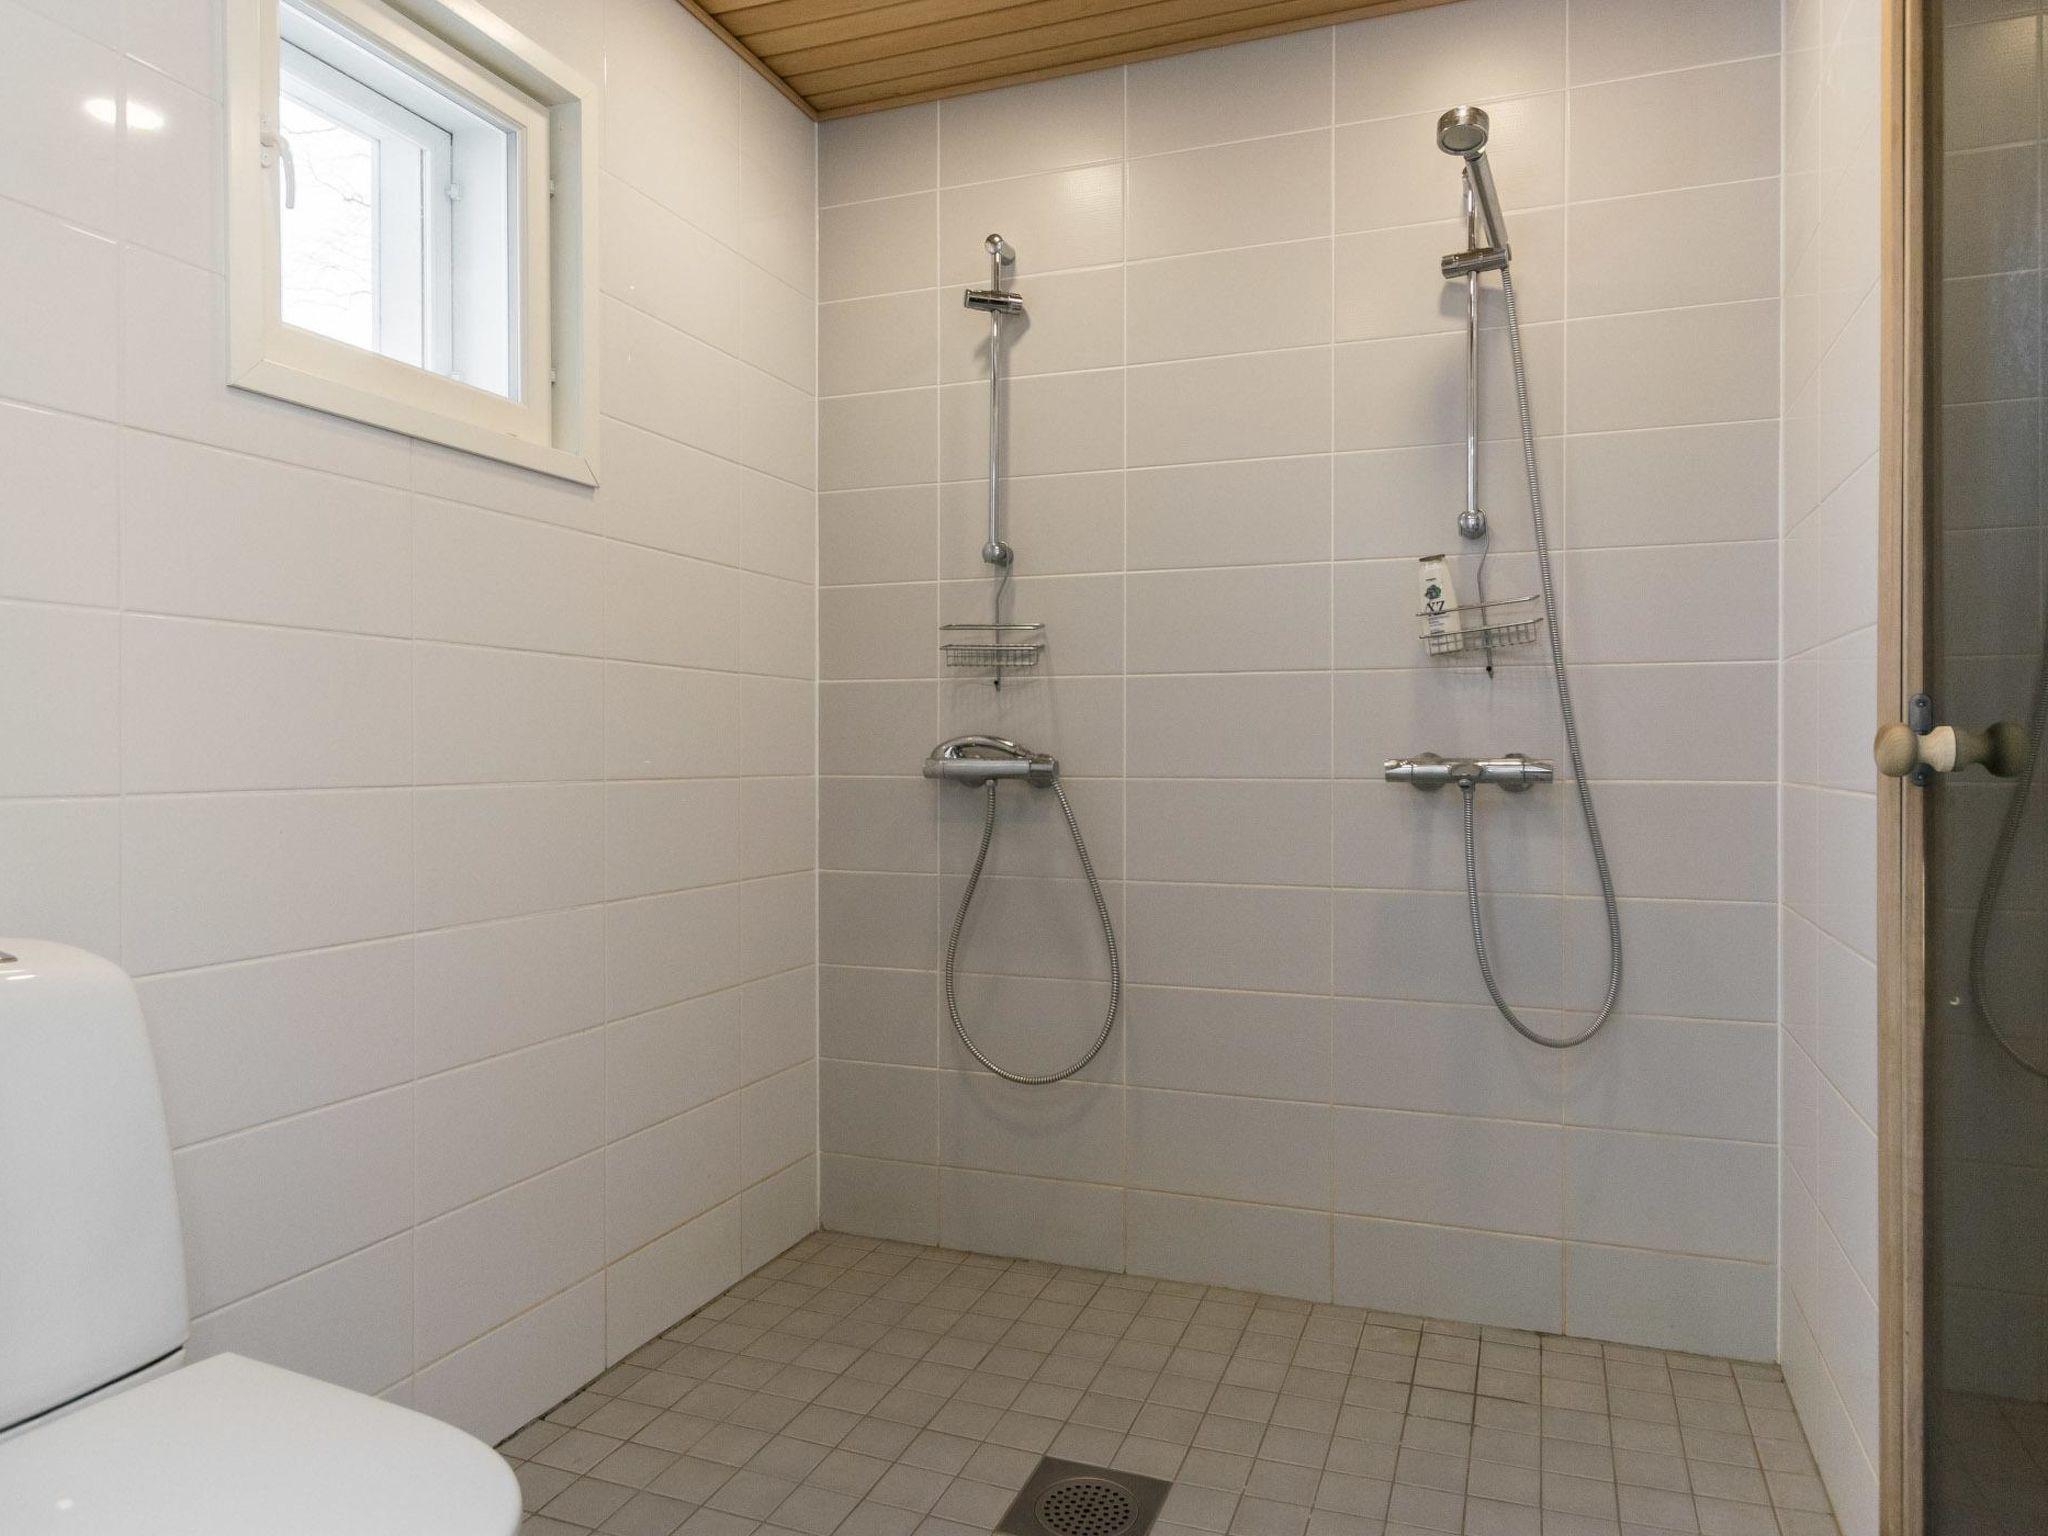 Photo 20 - 3 bedroom House in Mikkeli with sauna